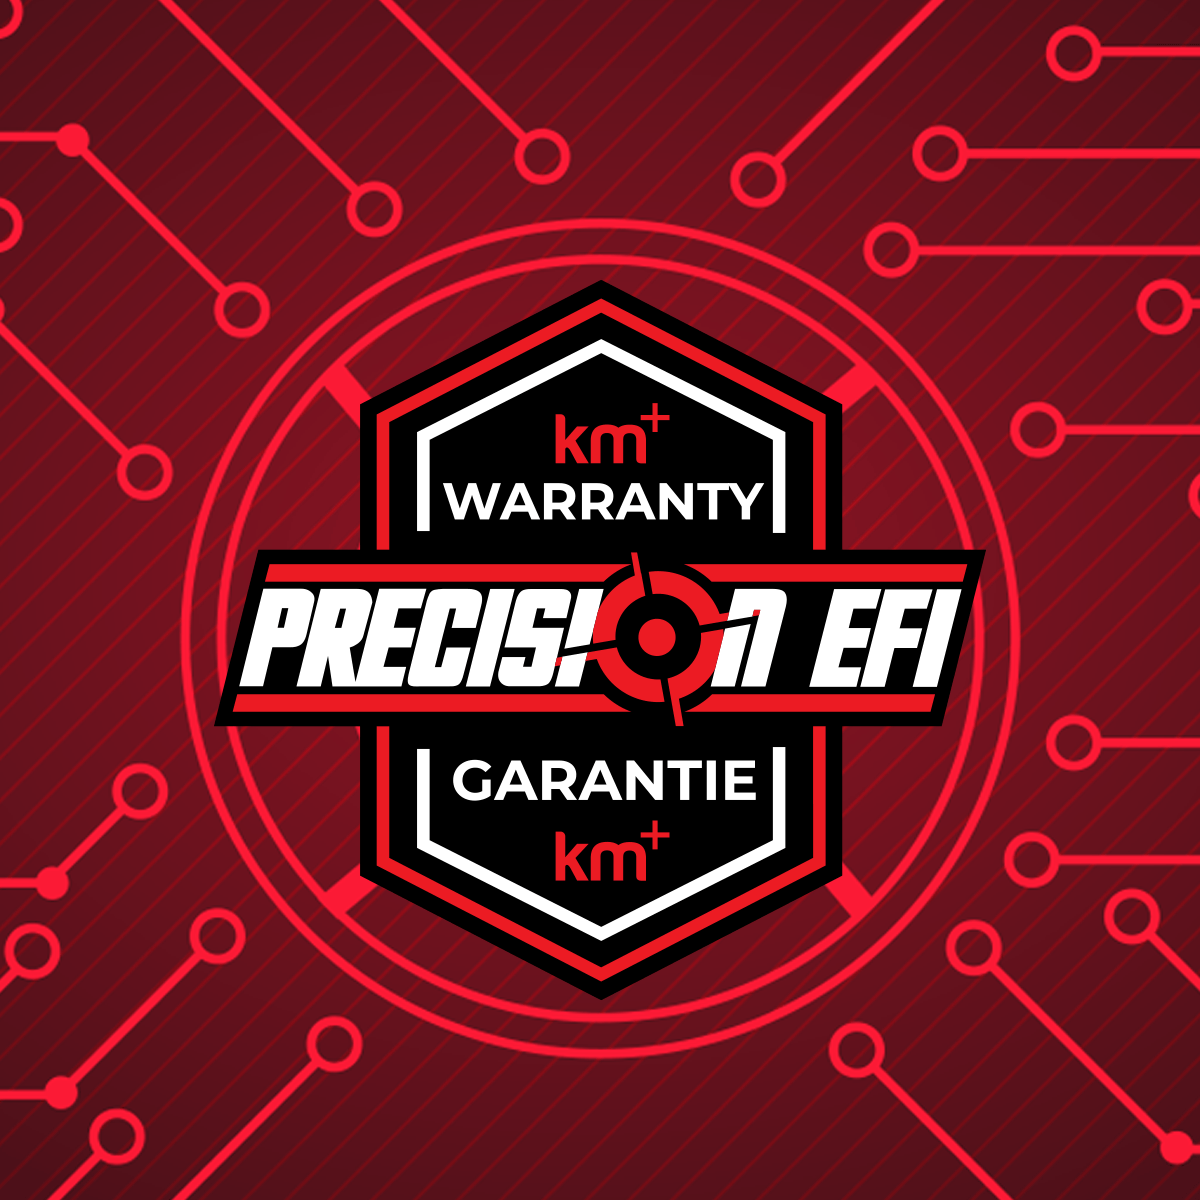 WARRANTY - C-TEC2 8000 - Precision EFI